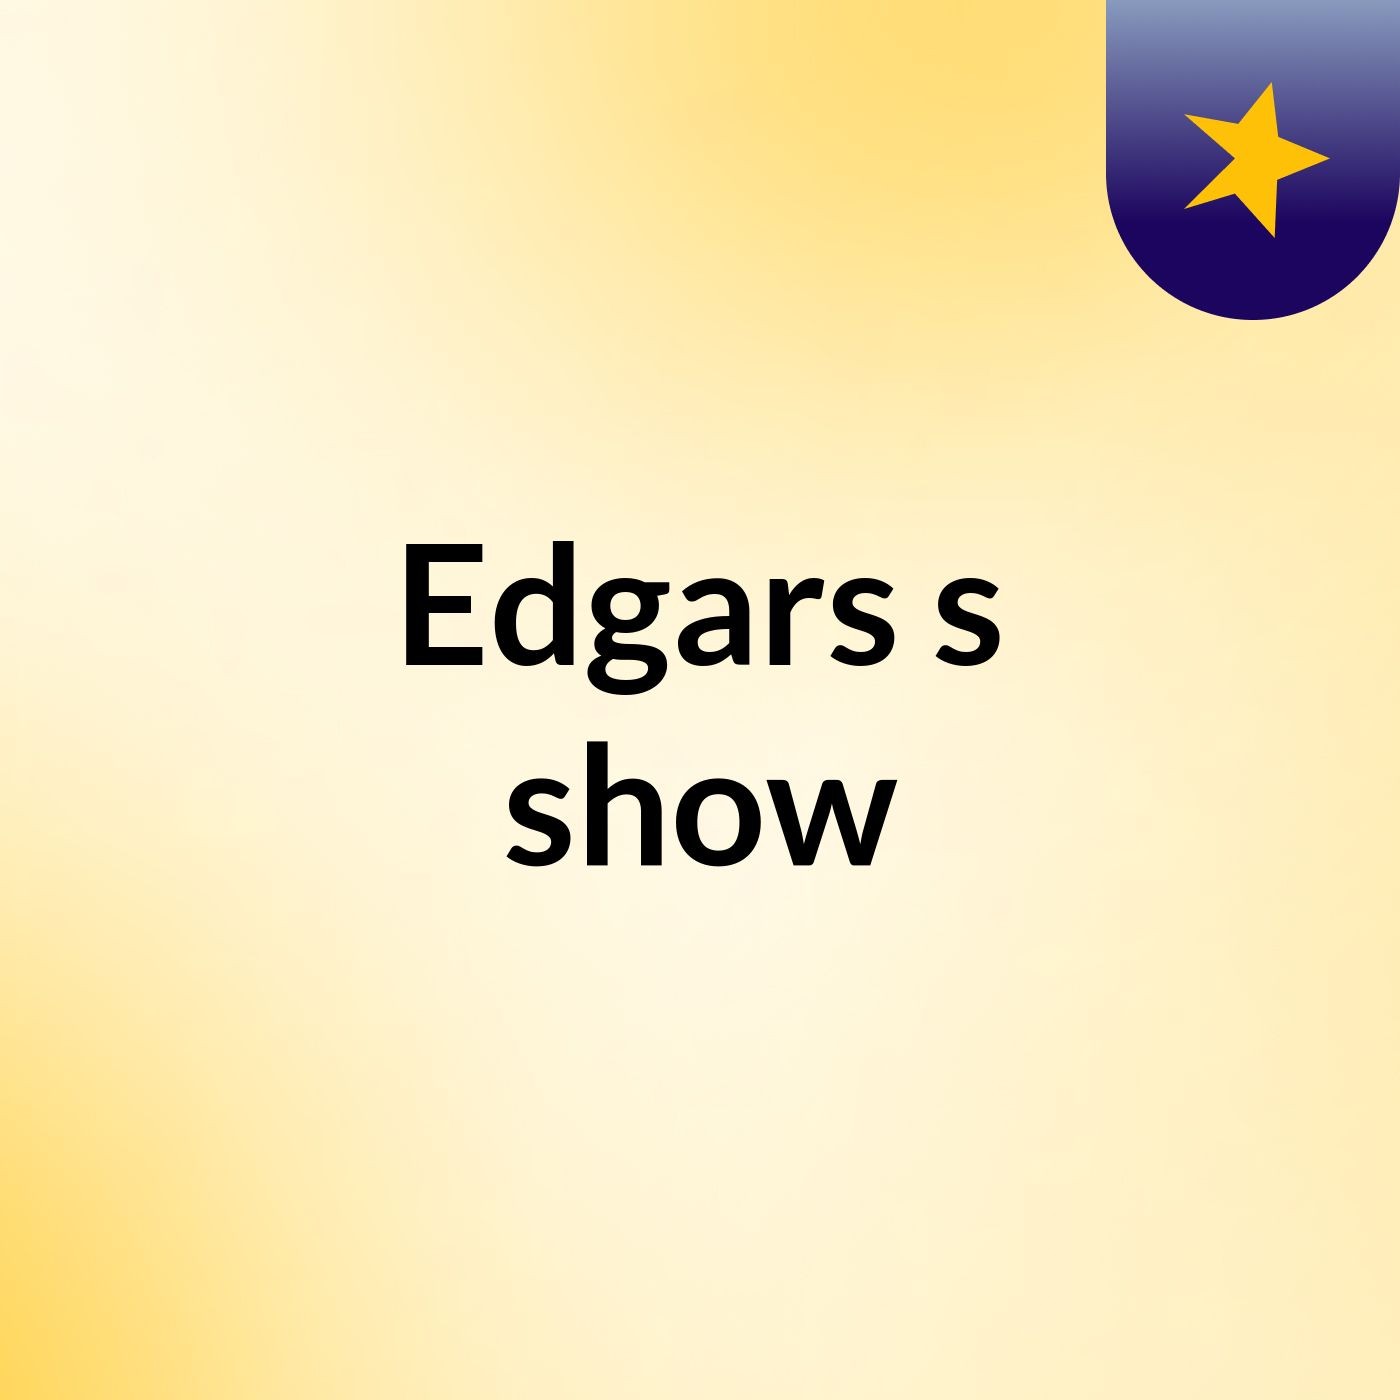 Edgars's show